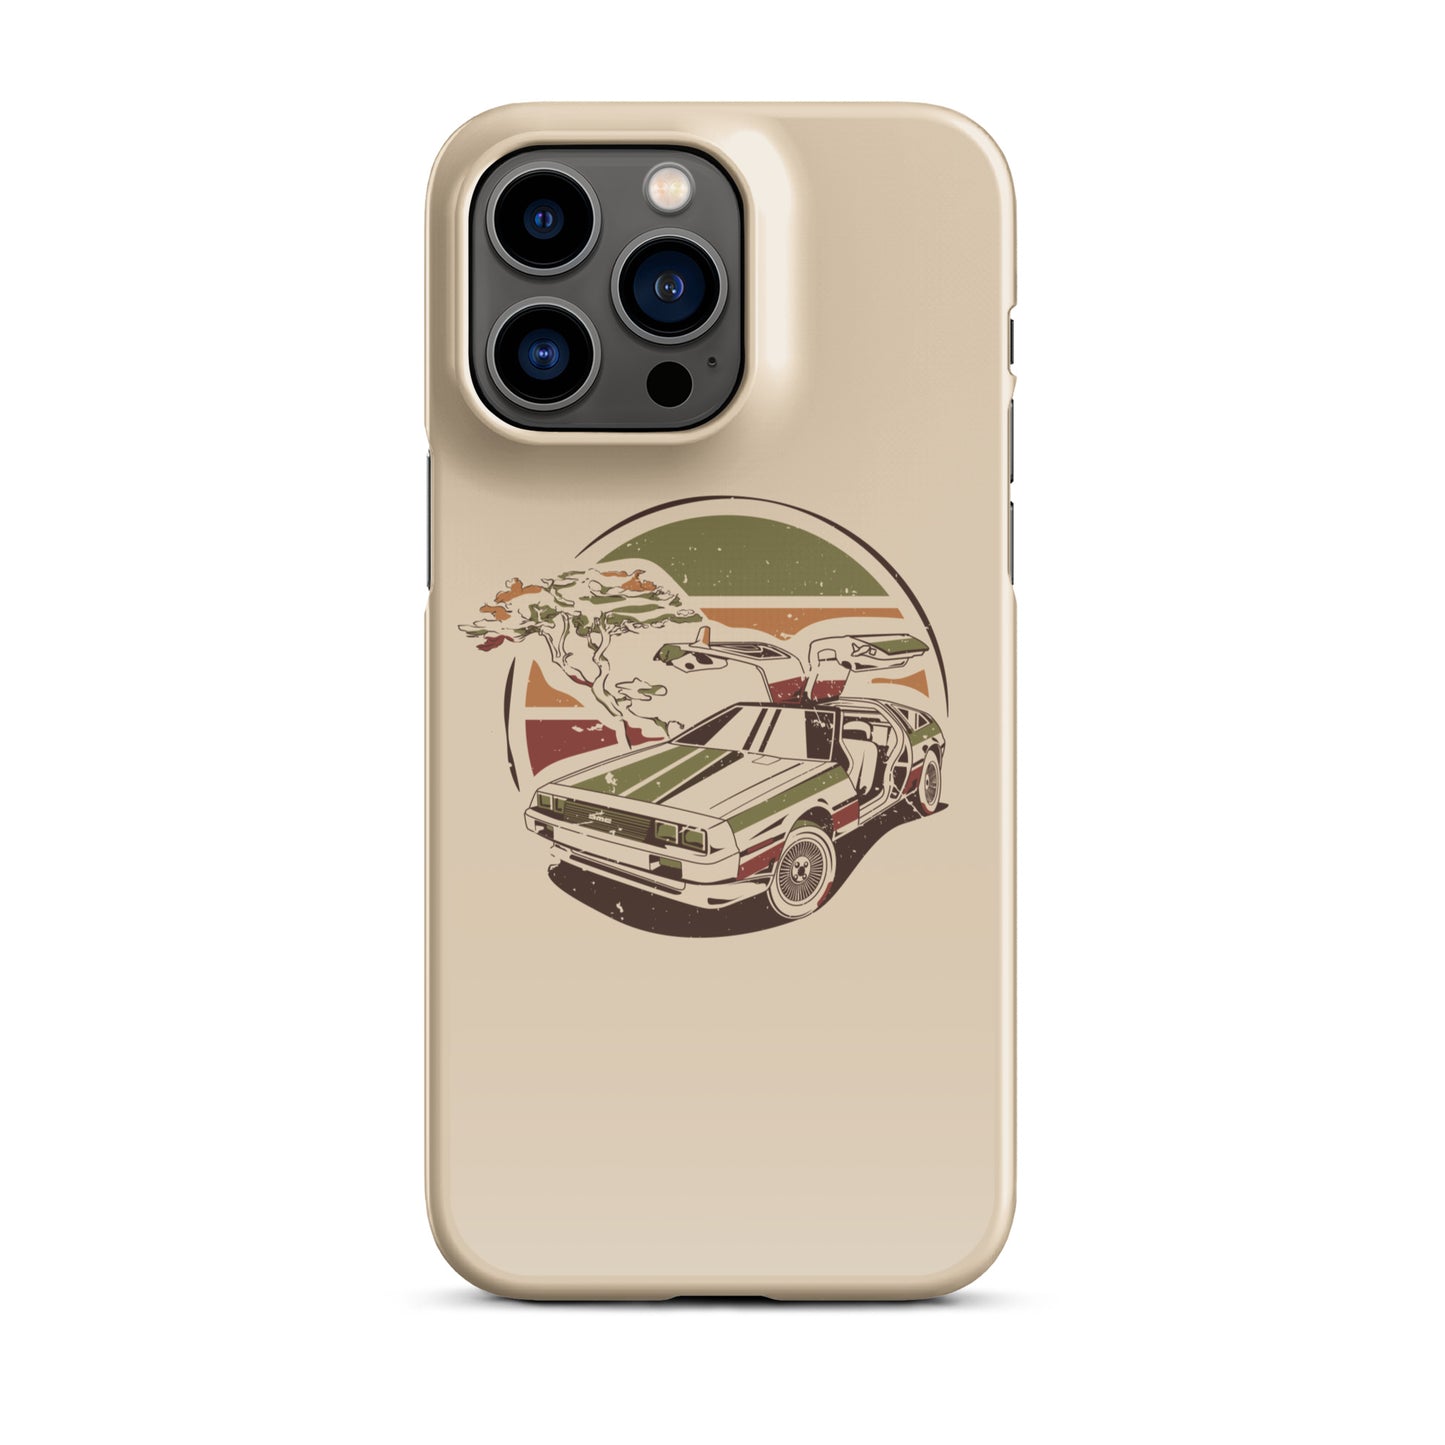 Stylized DeLorean iPhone Case